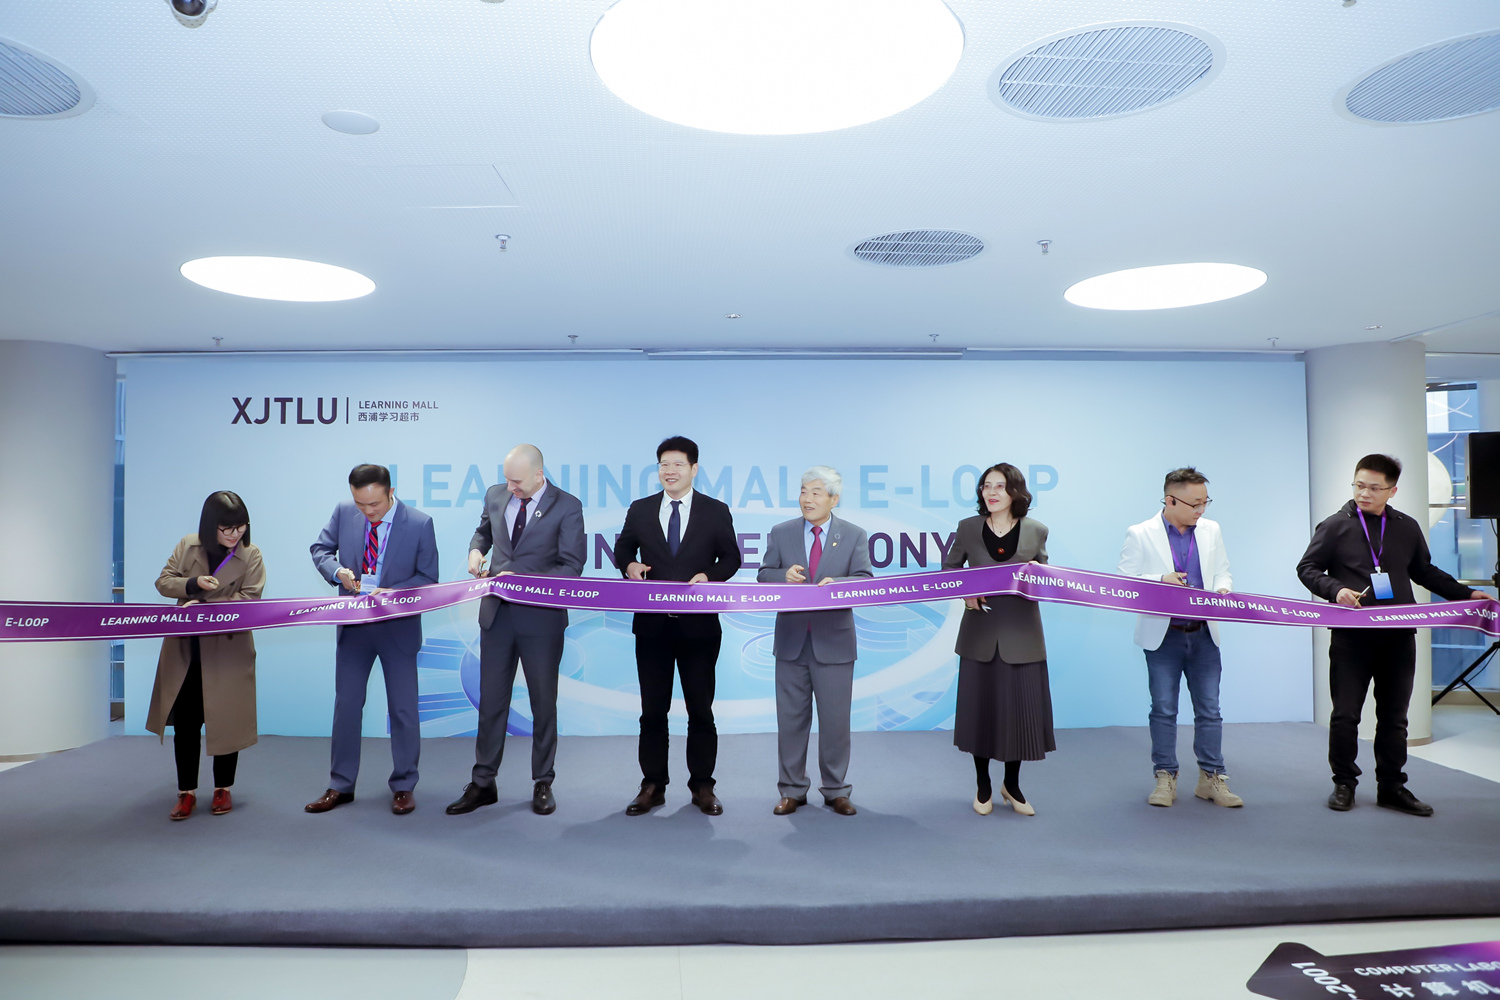 XJTLU Learning Mall launches its innovative E-Loop facility